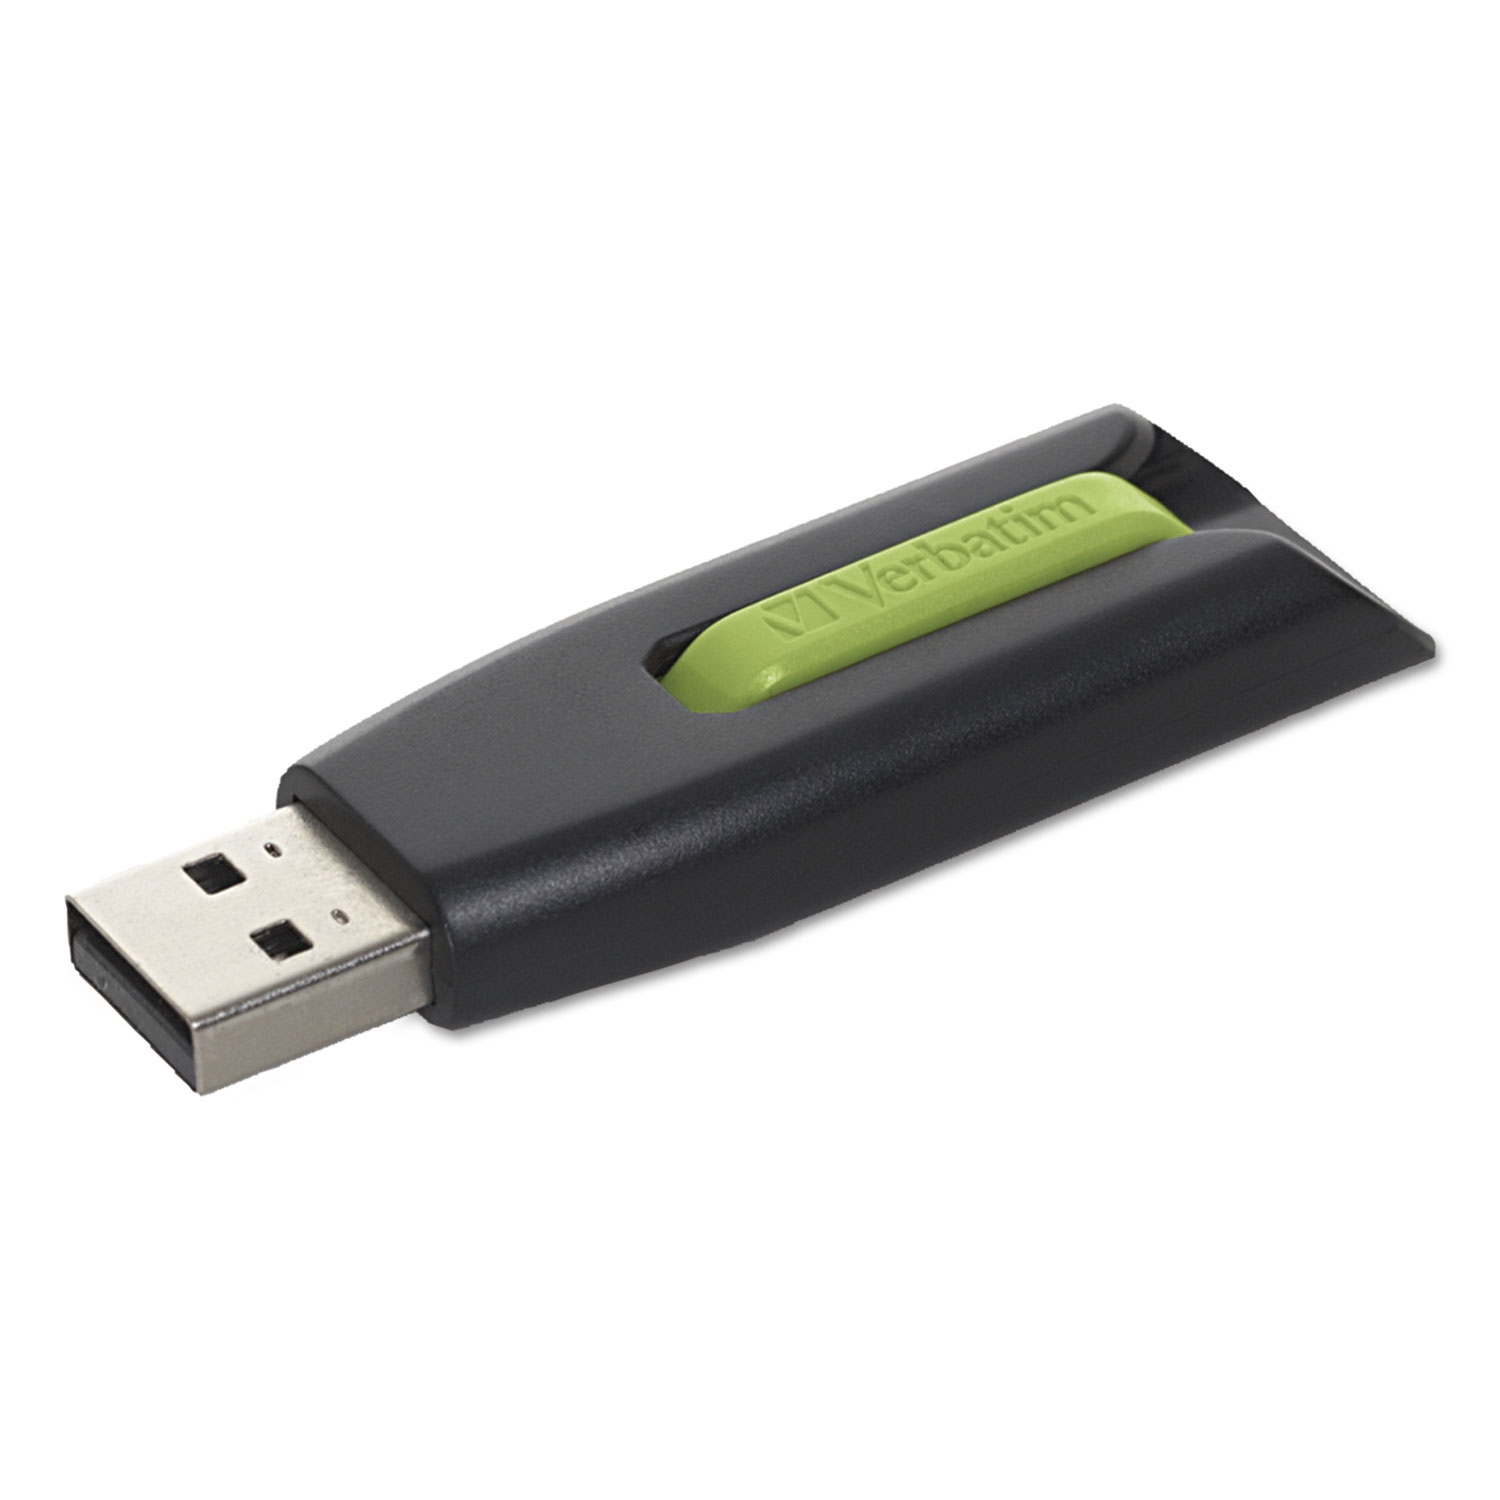 Store n Go V3 USB 3.0 Drive, 16GB, Black/Green